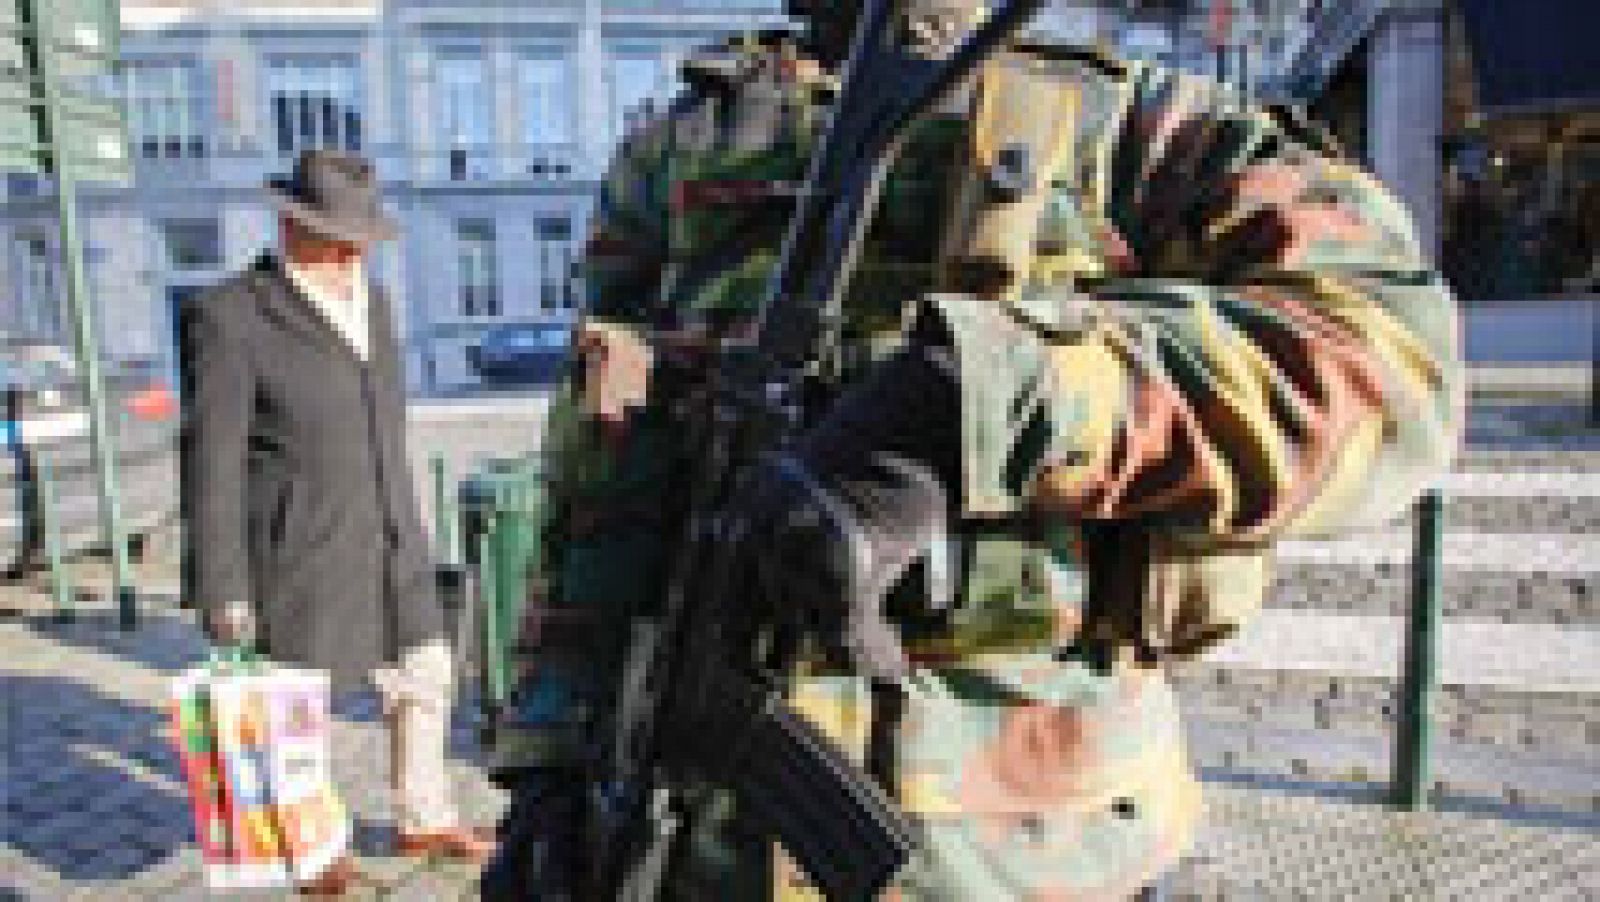 Telediario 1: Sigue la alerta máxima antiterrorista en Europa | RTVE Play